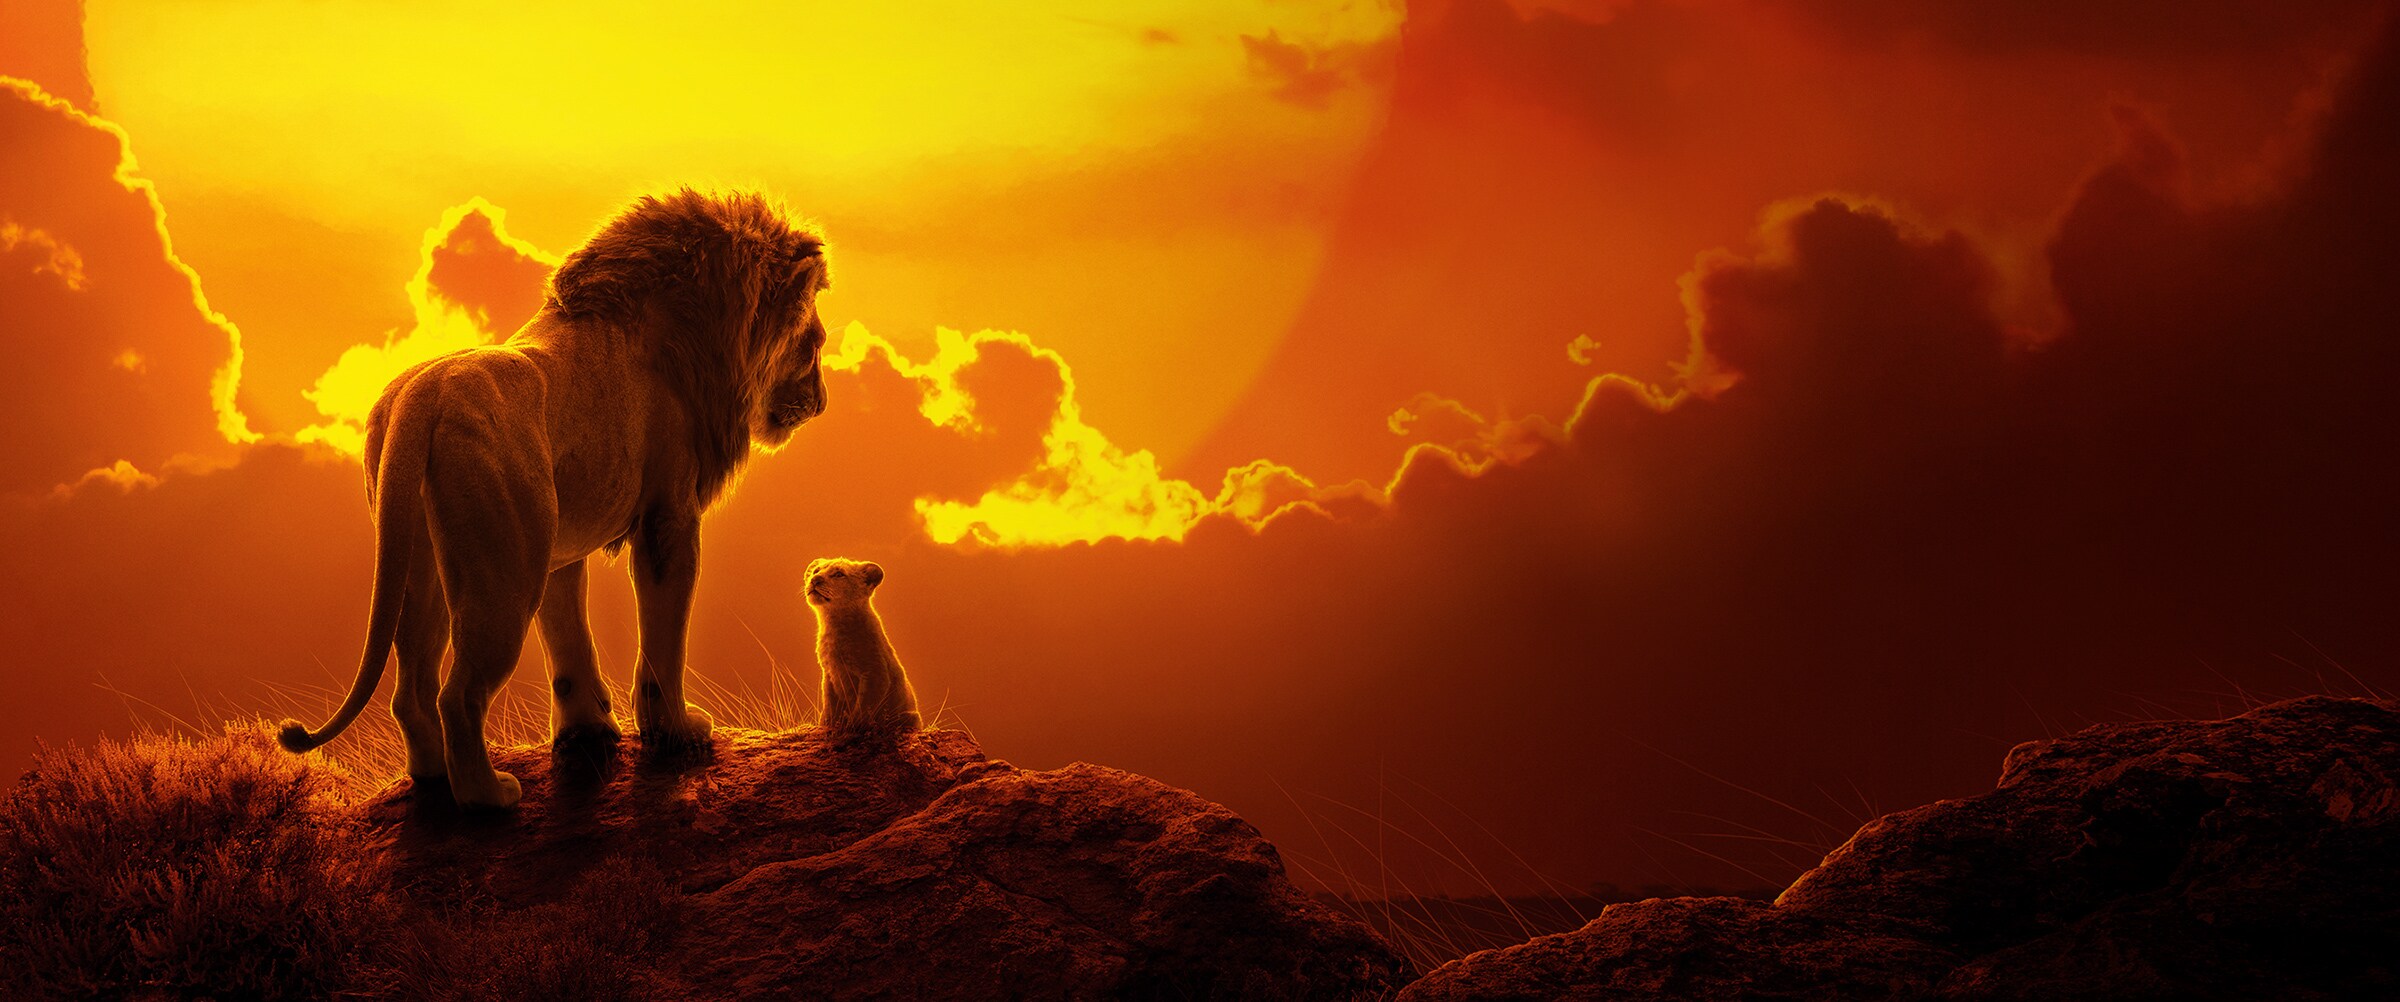 EMEA Banner - Disney's The Lion King (2019) - Showcase Hero - Mufasa and Simba Orange Sky